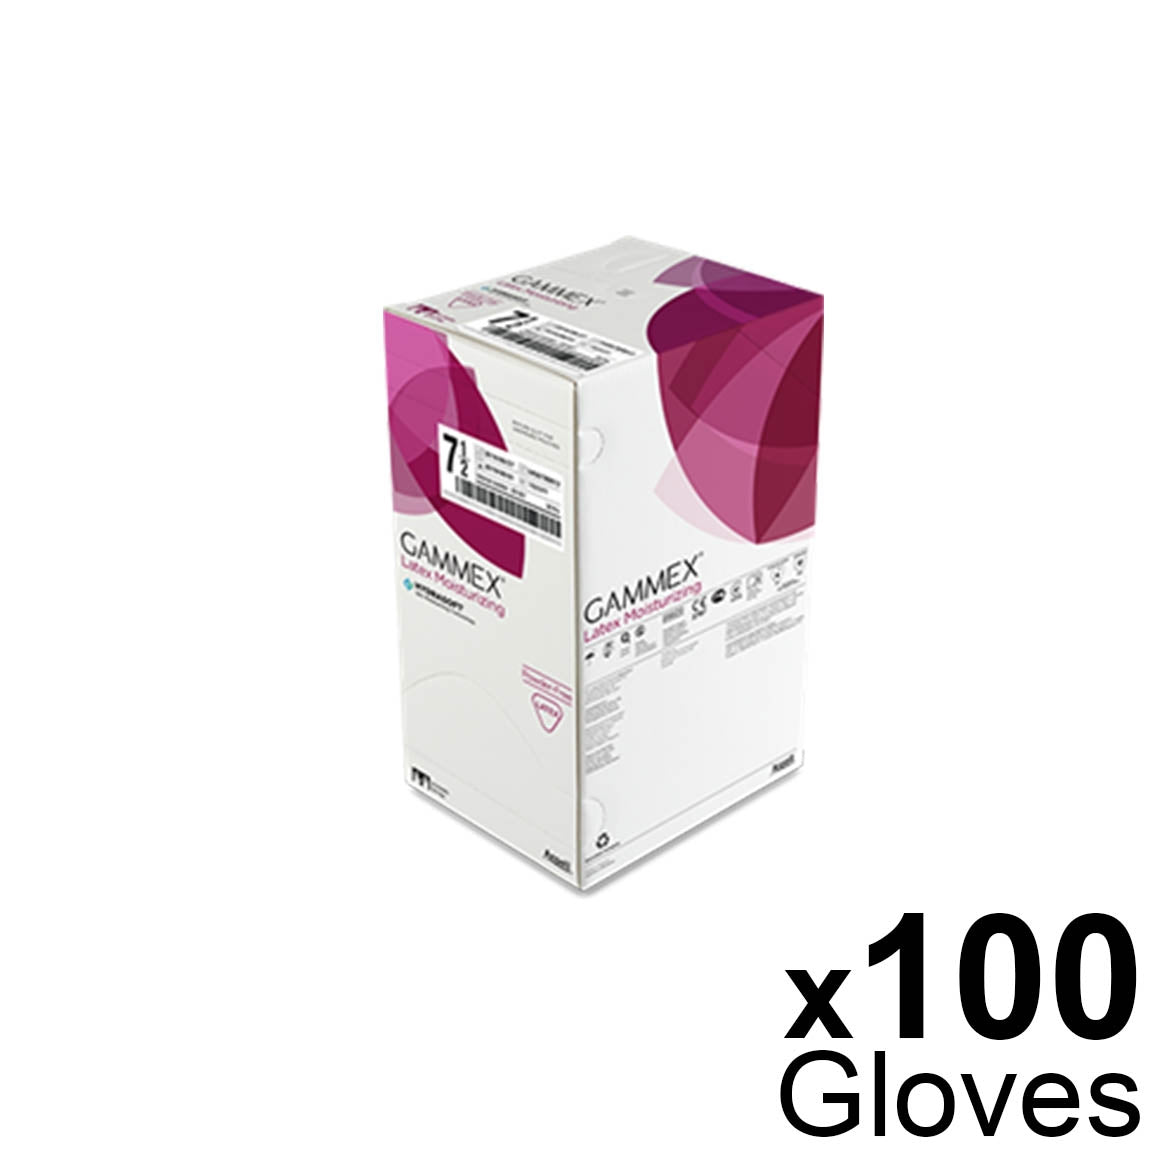 GAMMEX Latex Moisturizing Latex - Powder-Free Surgical Glove x 50 Pairs